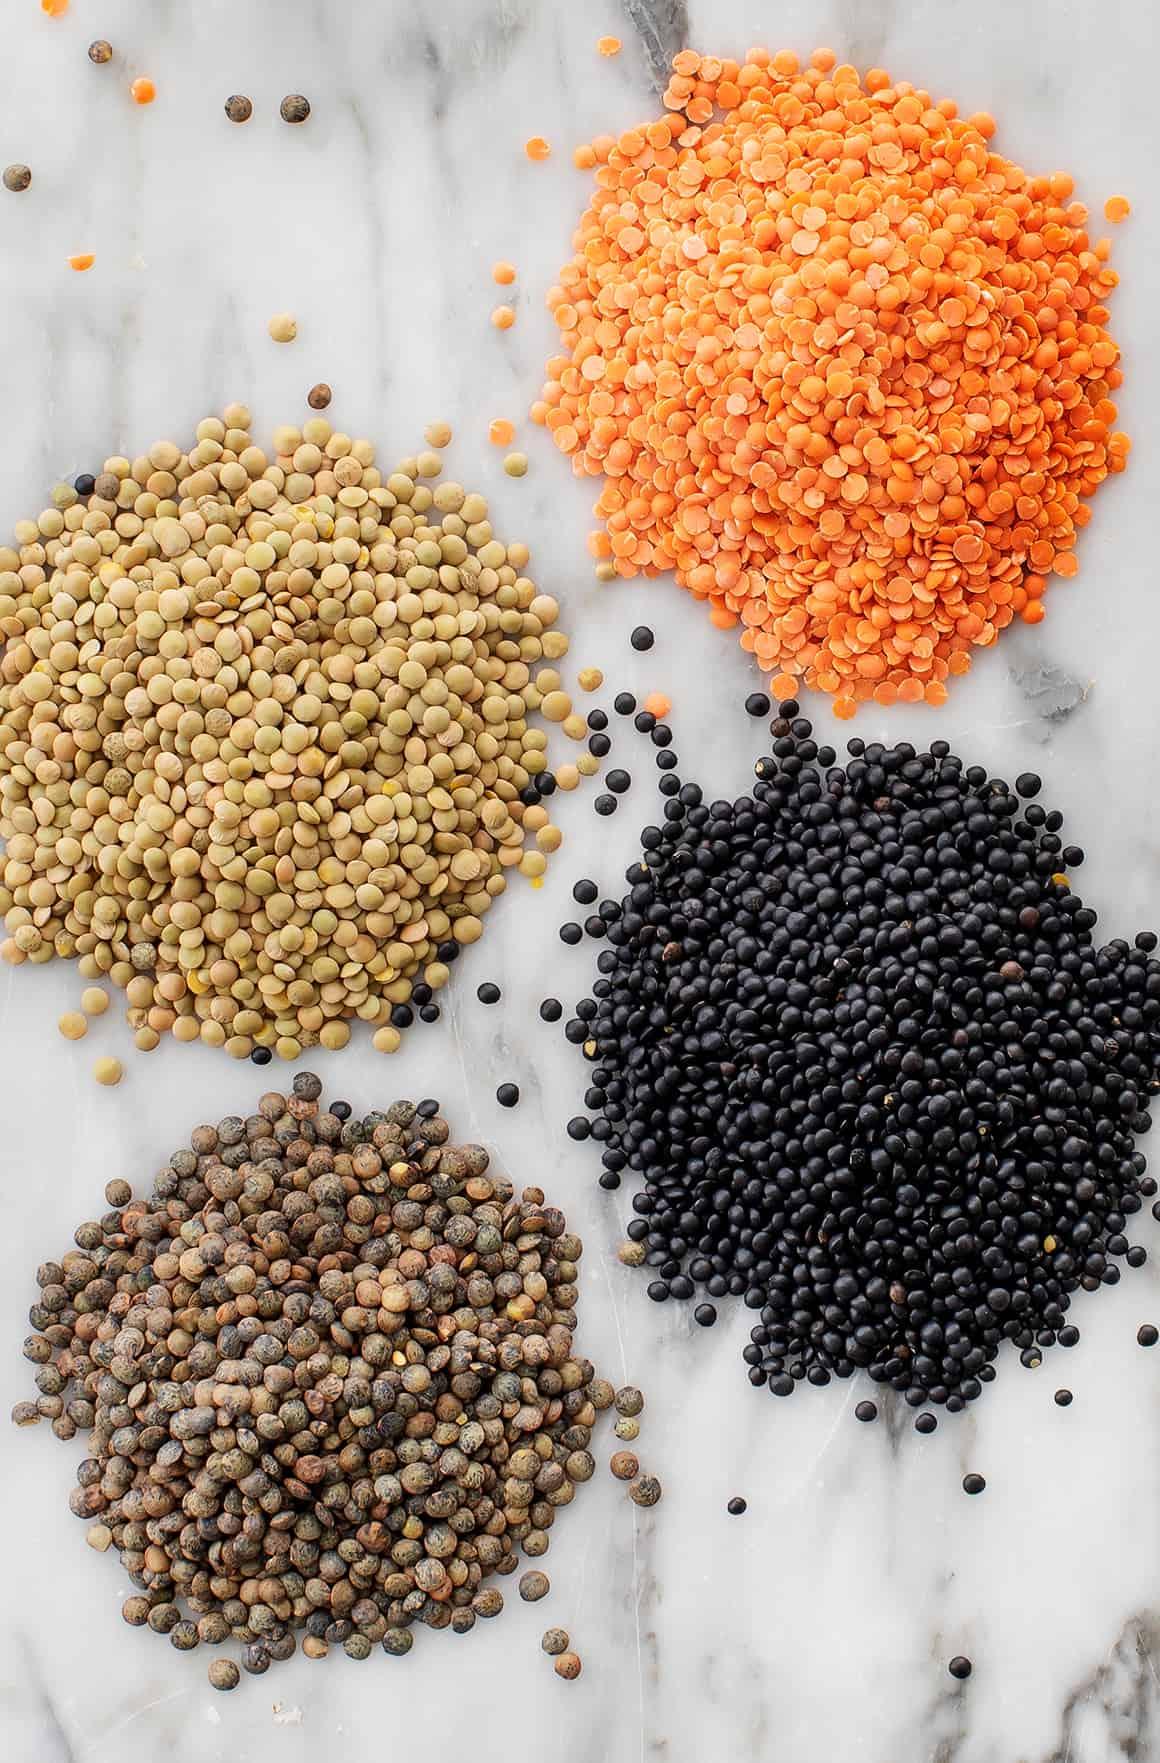 Types of lentils